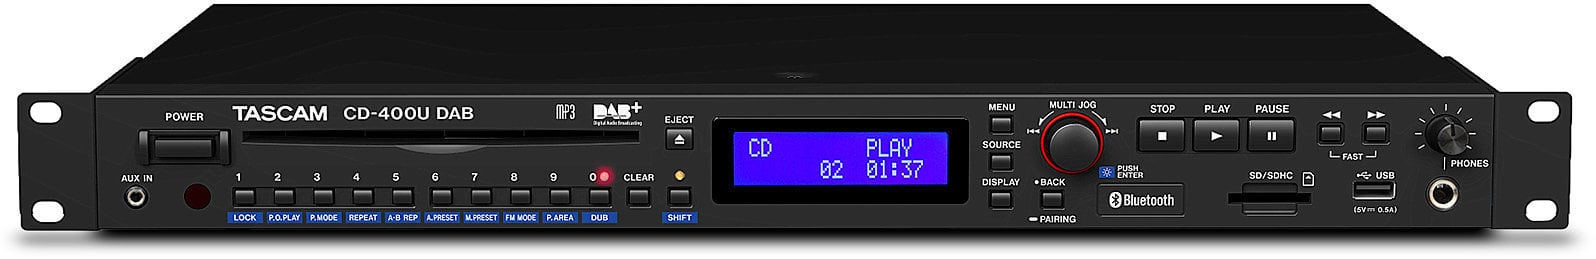 Rack DJ-Player Tascam CD-400UDAB